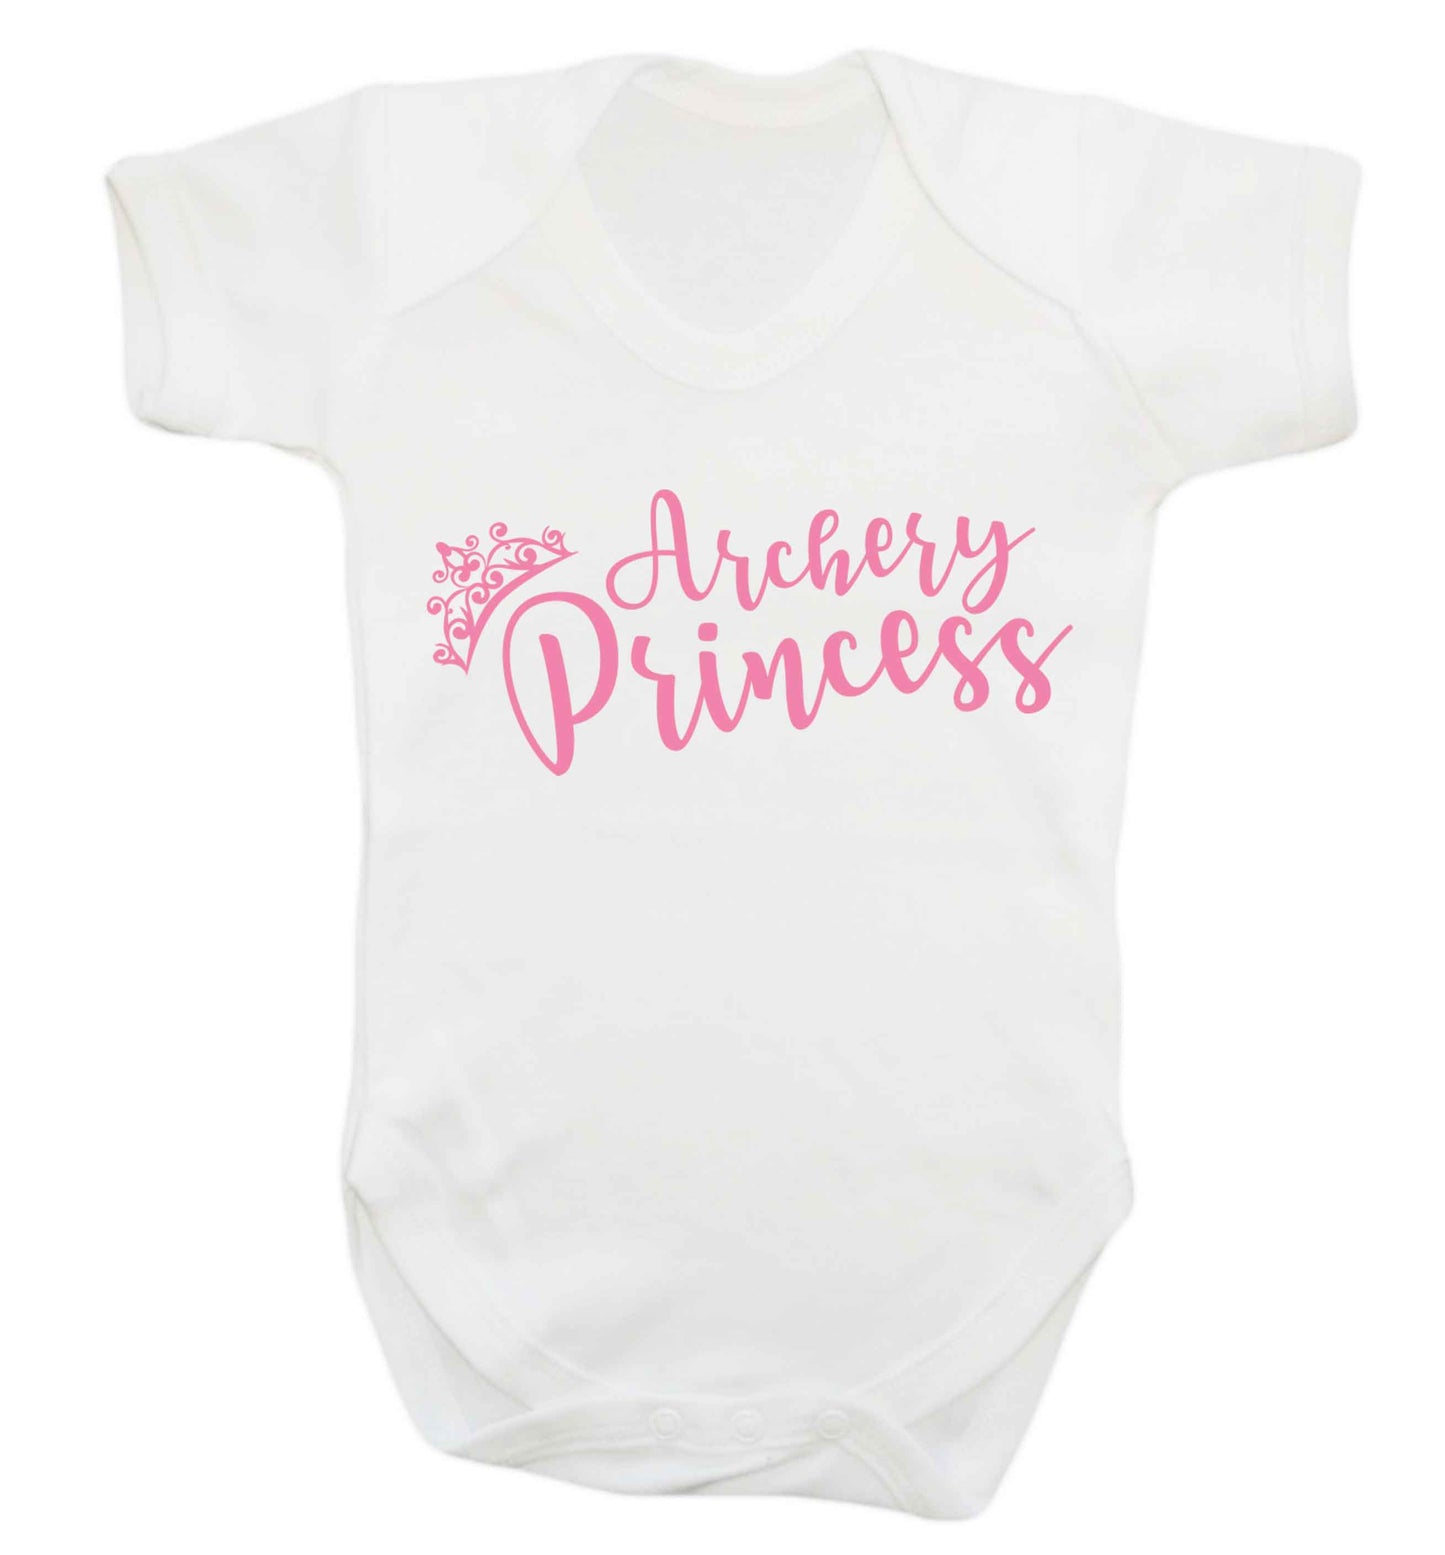 Archery princess Baby Vest white 18-24 months